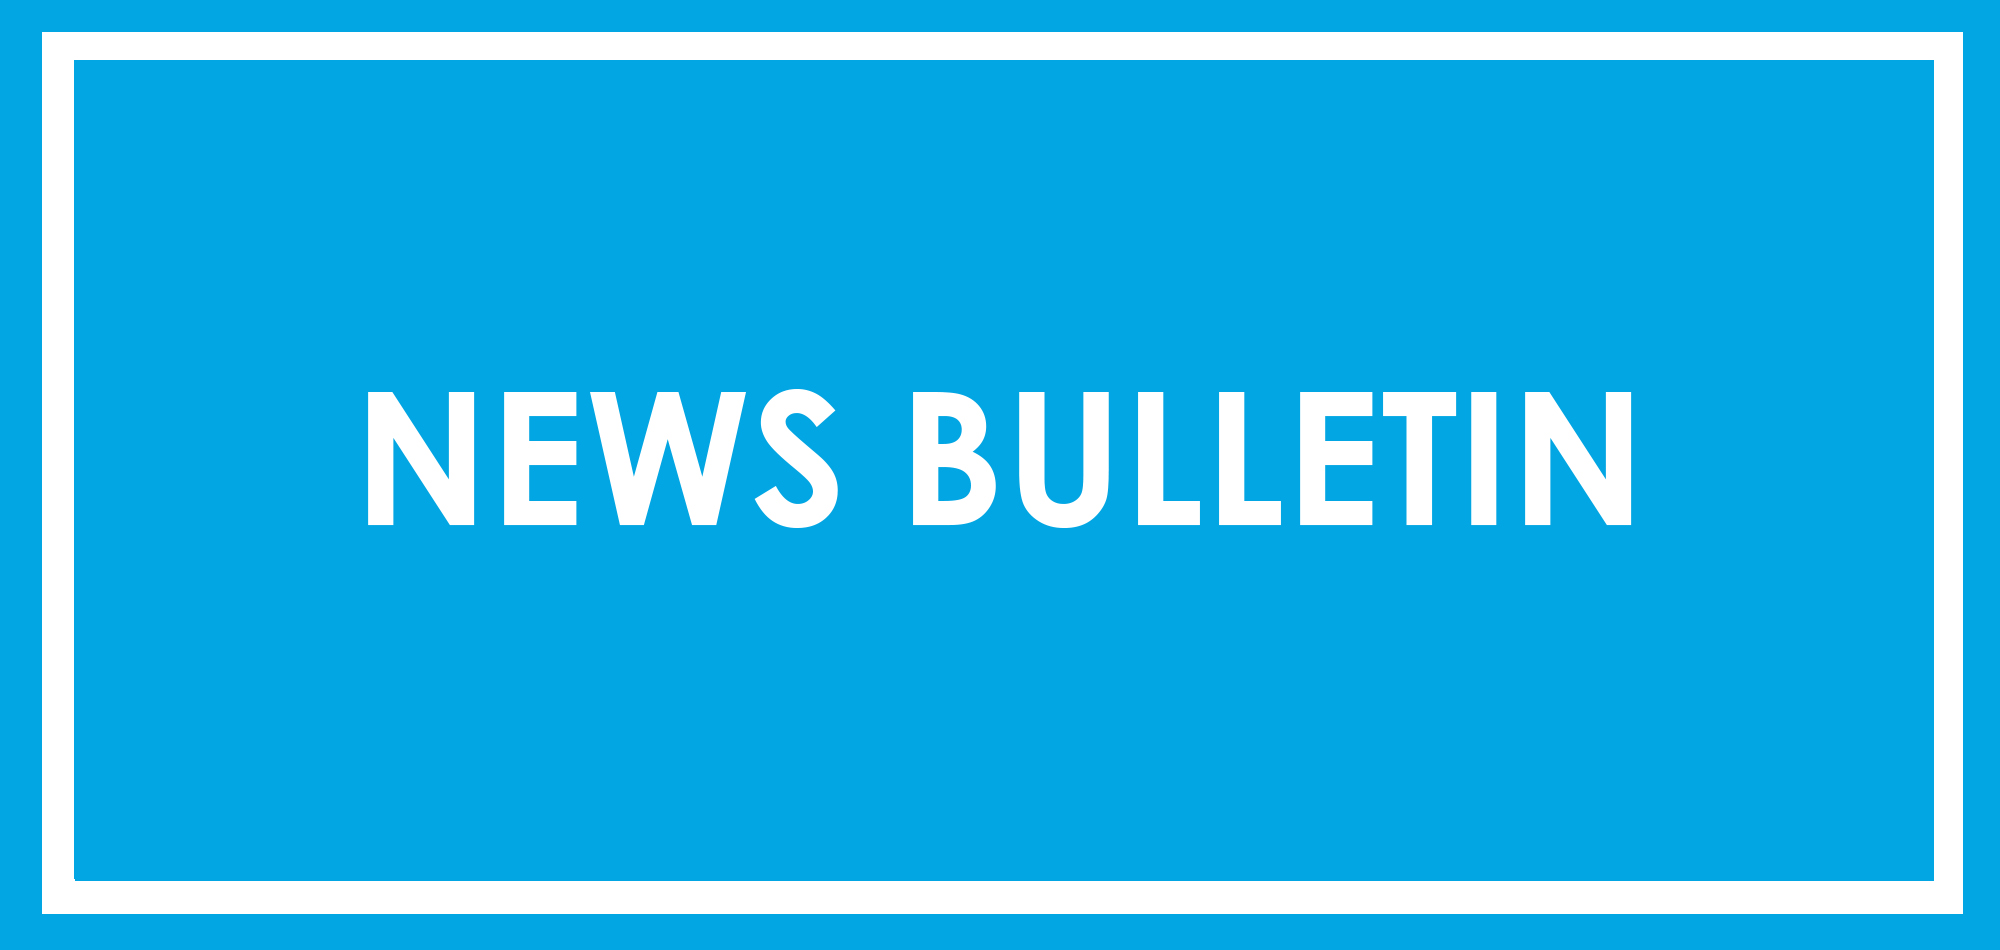 News Bulletin - 23.02.21